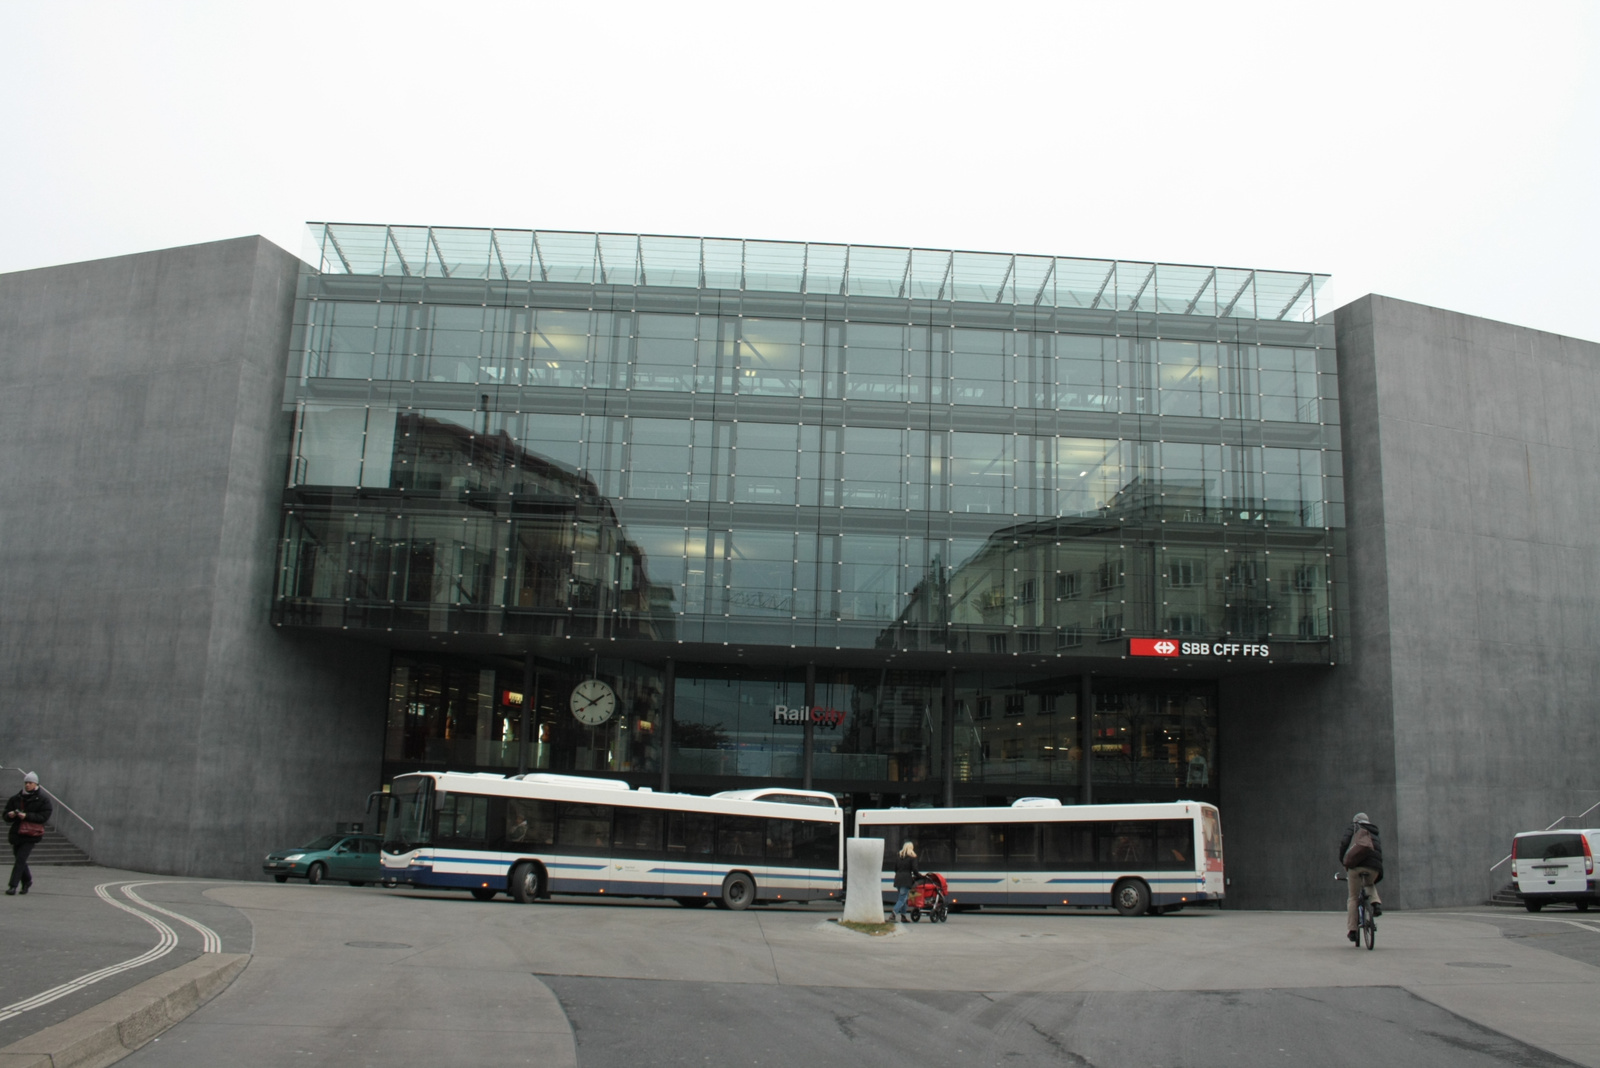 Bahnhof Zug